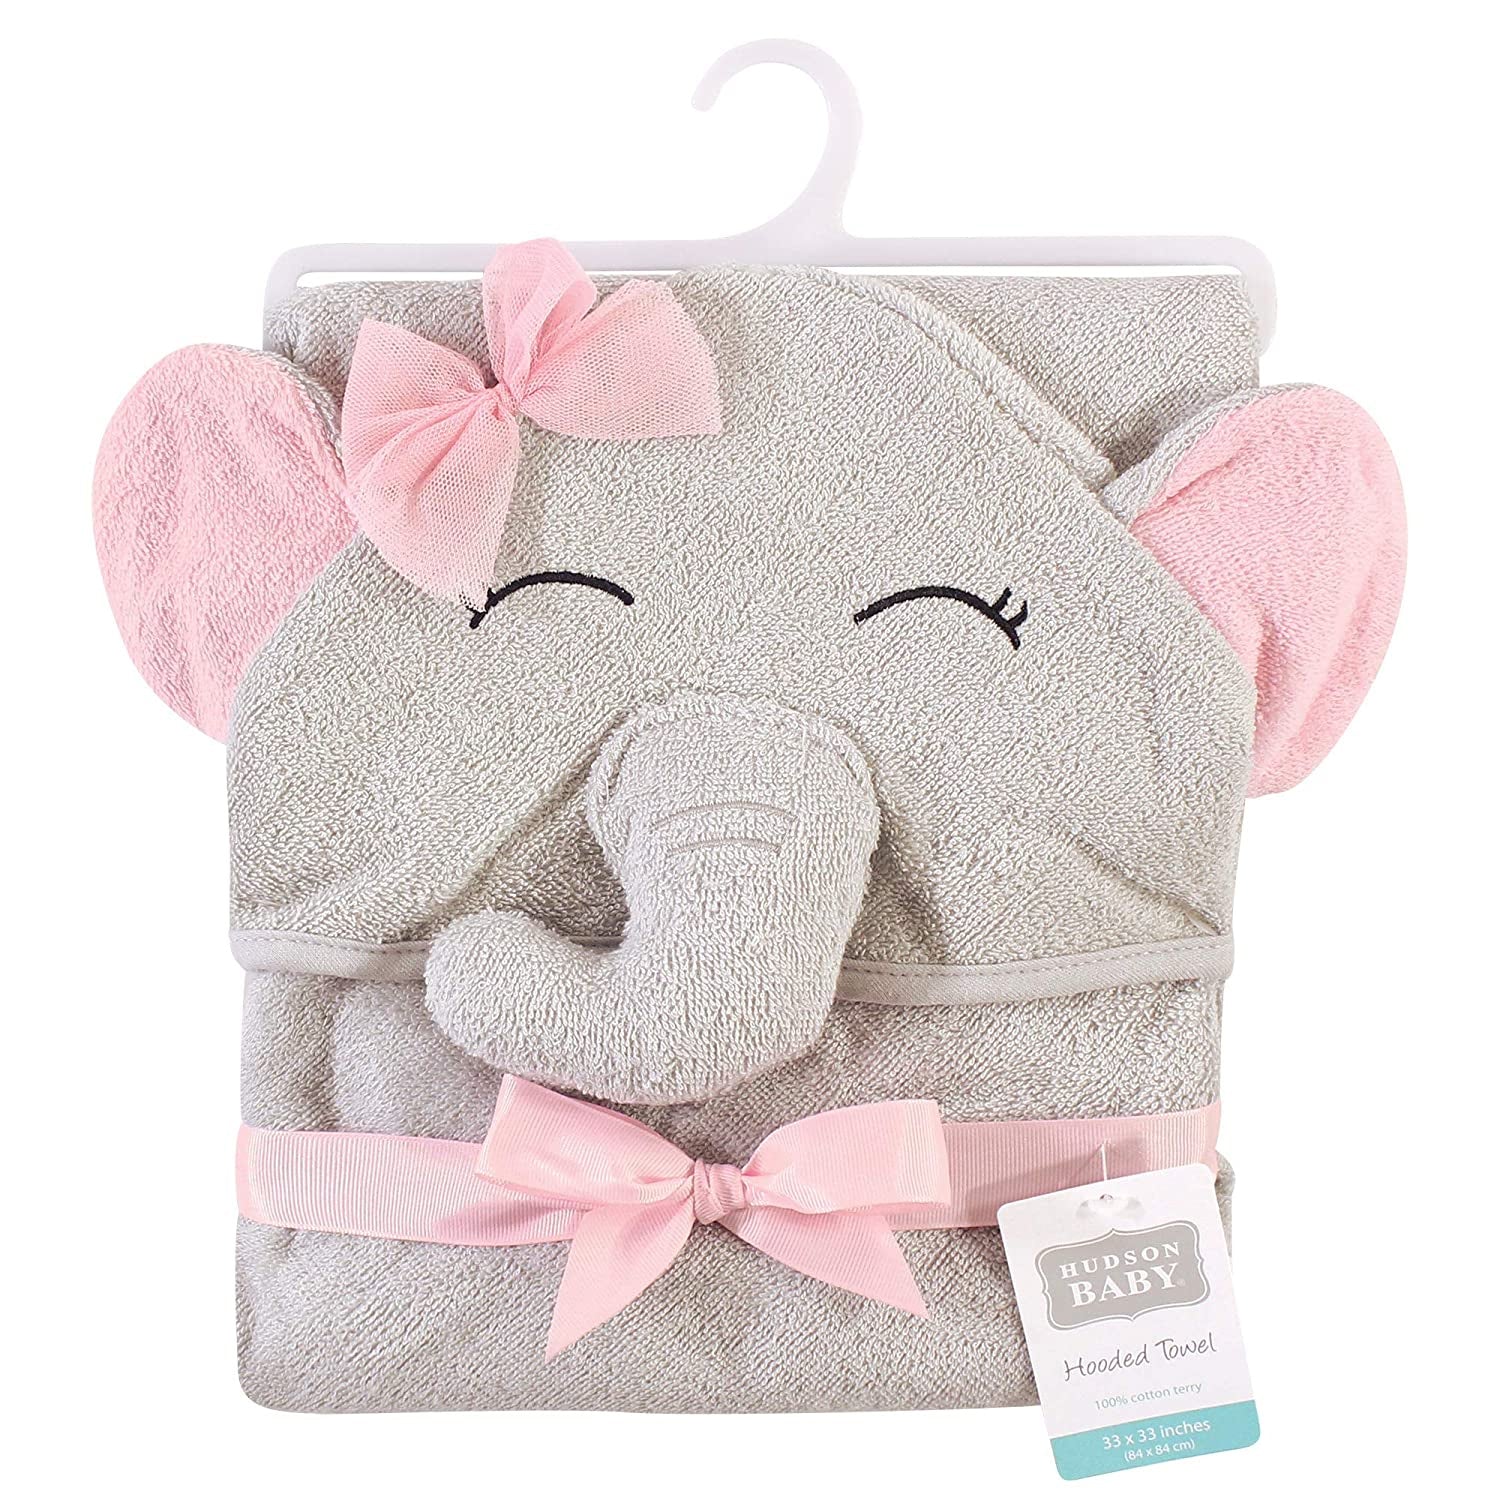 Hudson Baby Animal Face Hooded Towel, Pretty Elephant